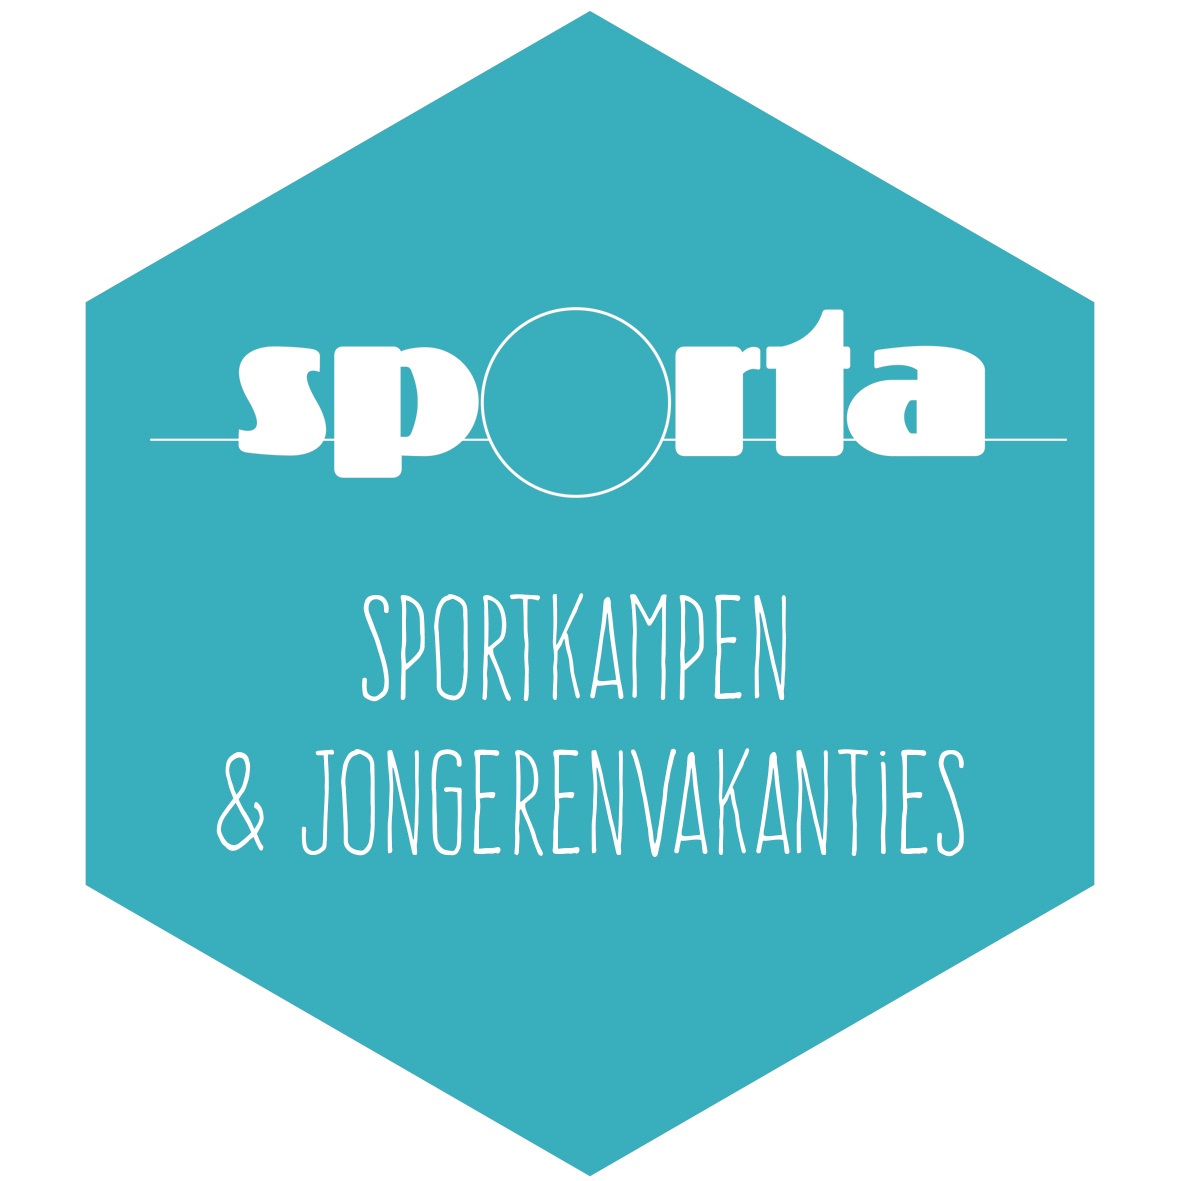 Sporta logo